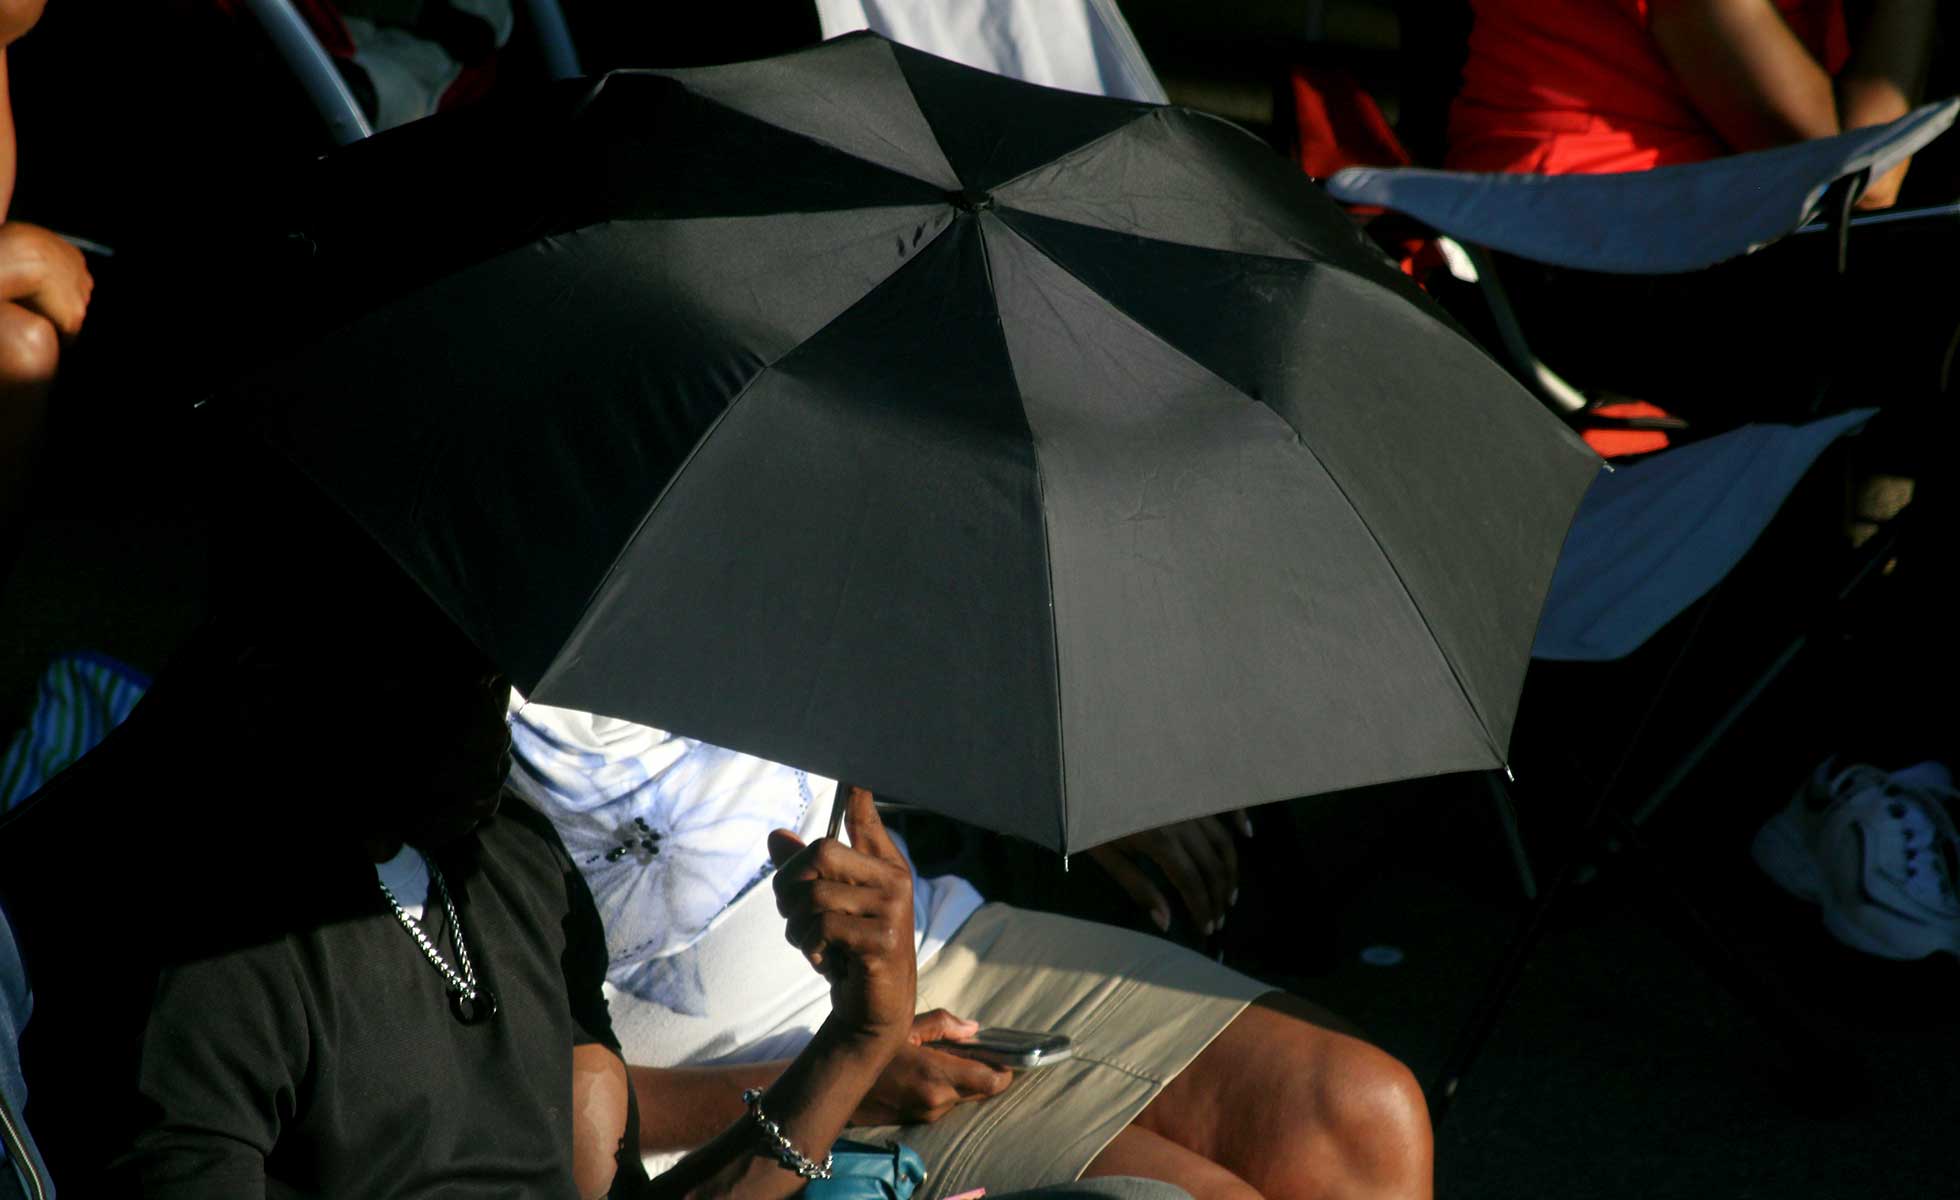 Umbrella used for shade